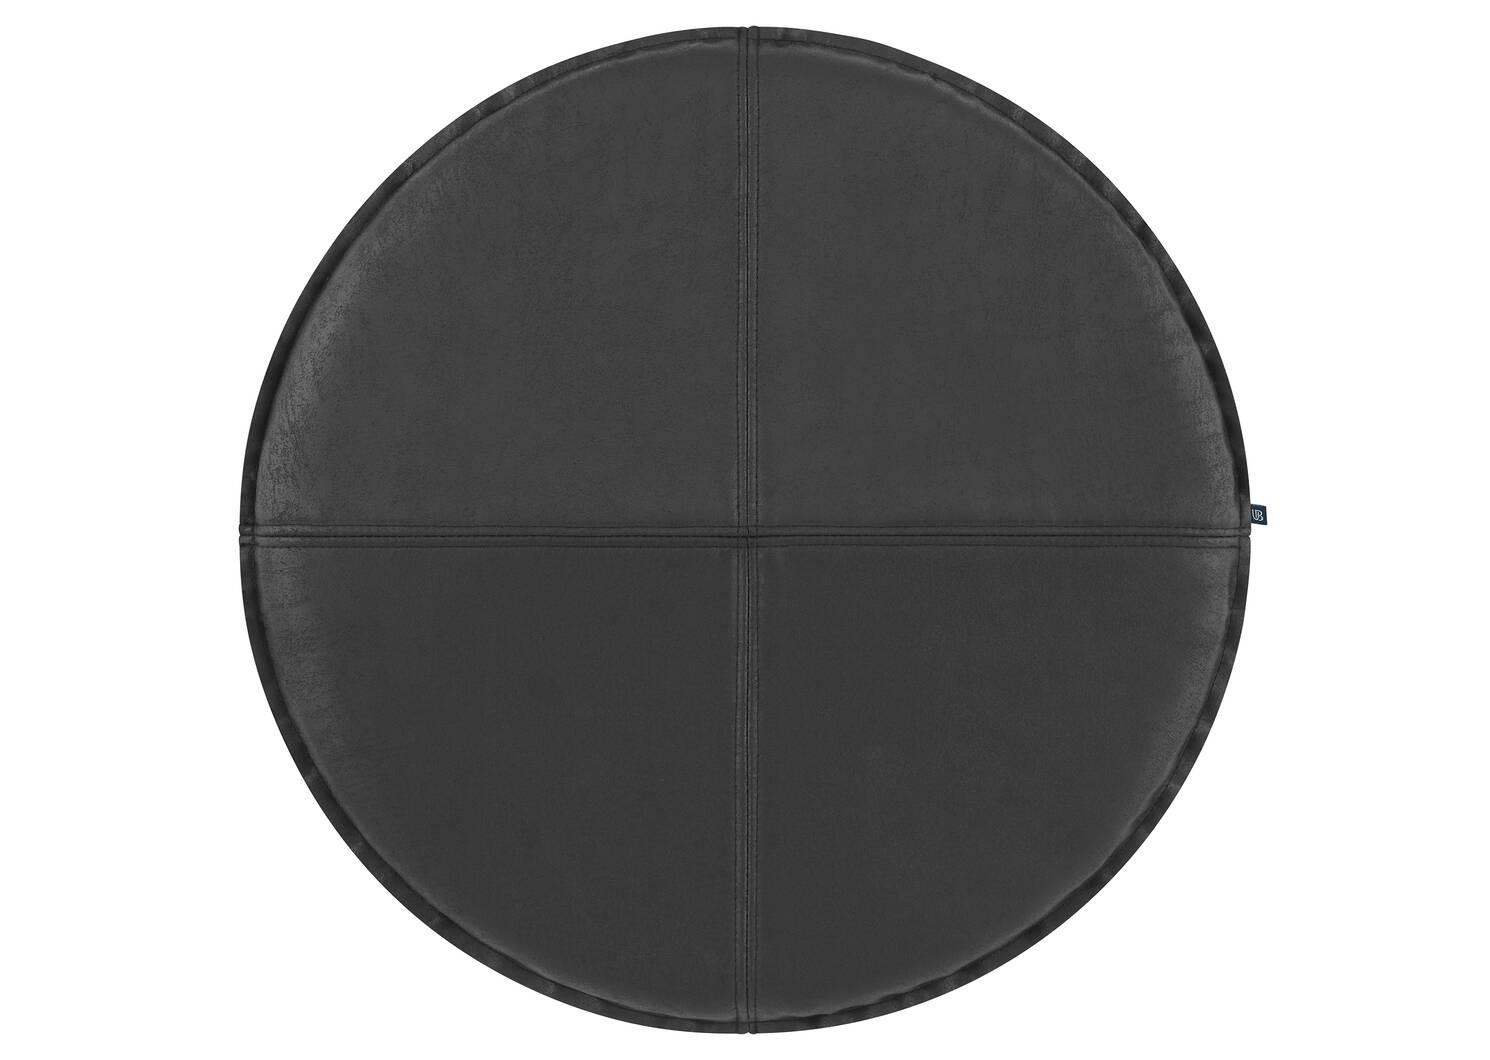 Circle Seat Cushion Faux Leather Black